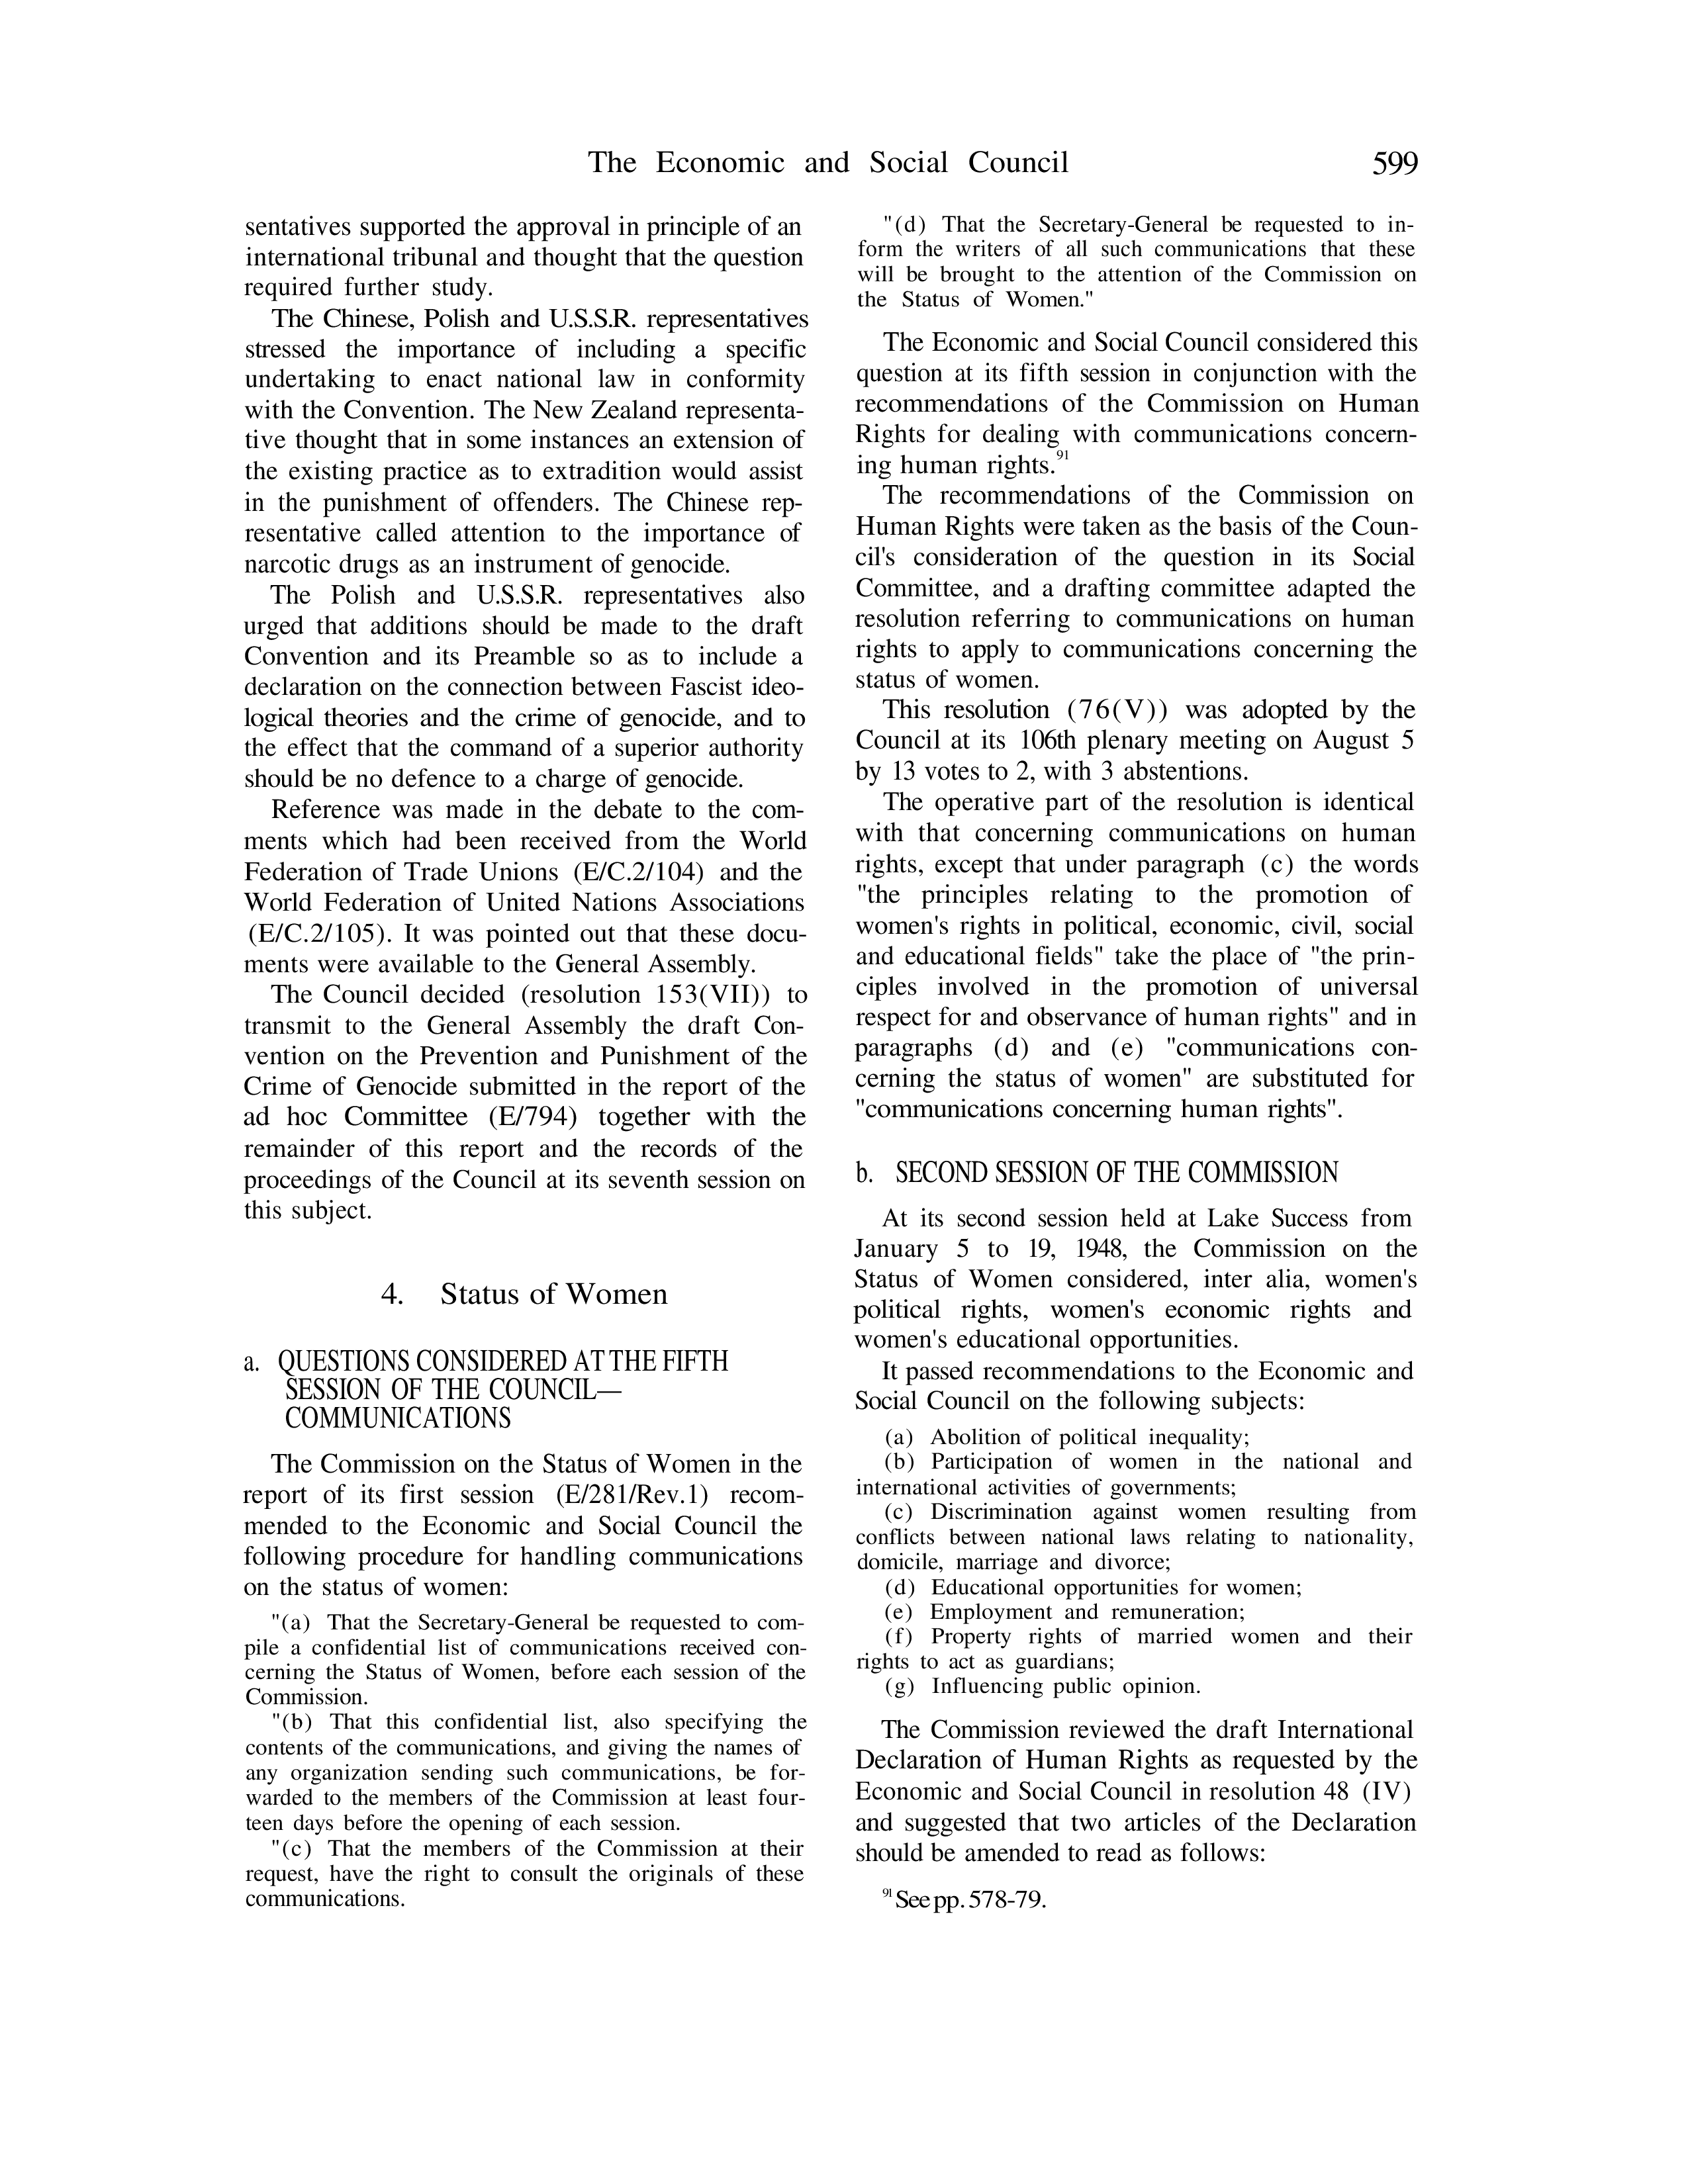 YUN Volume_Page 1947-48_622